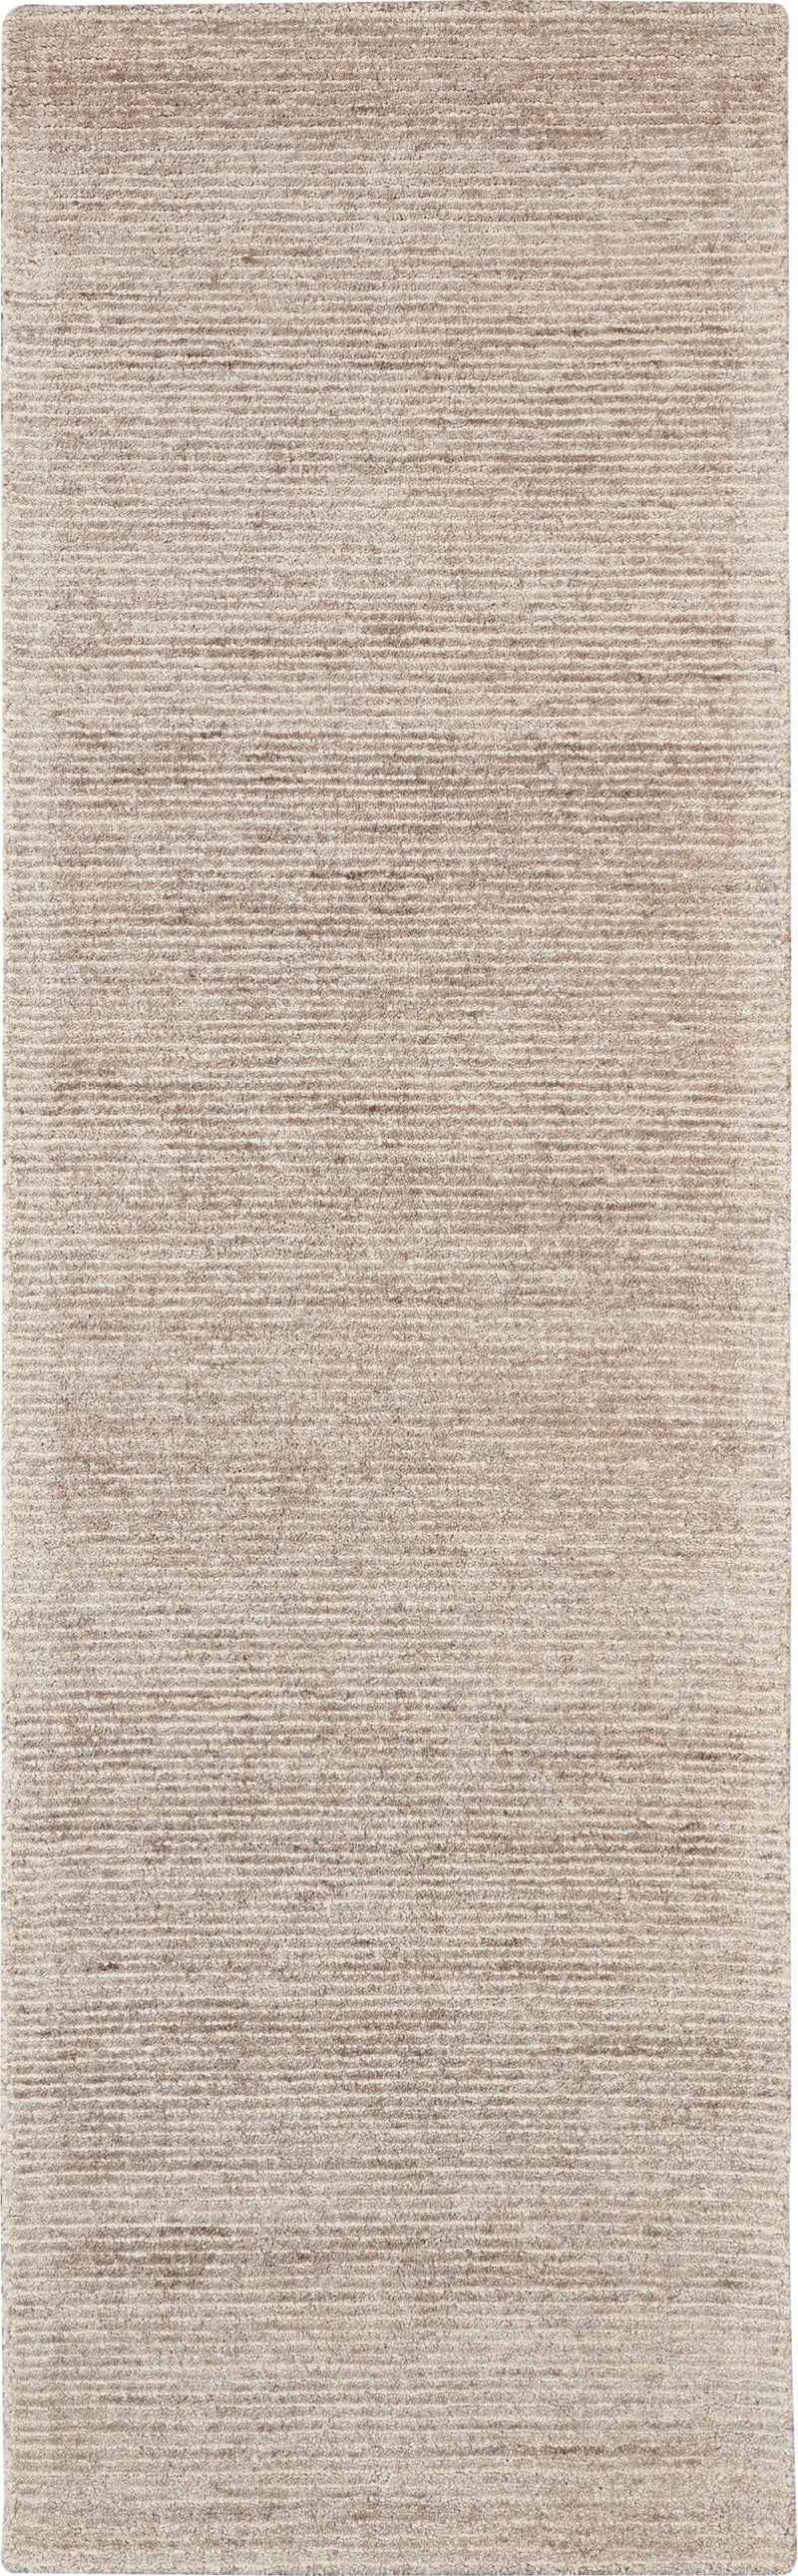 media image for weston handmade oatmeal rug by nourison 99446004642 redo 2 219